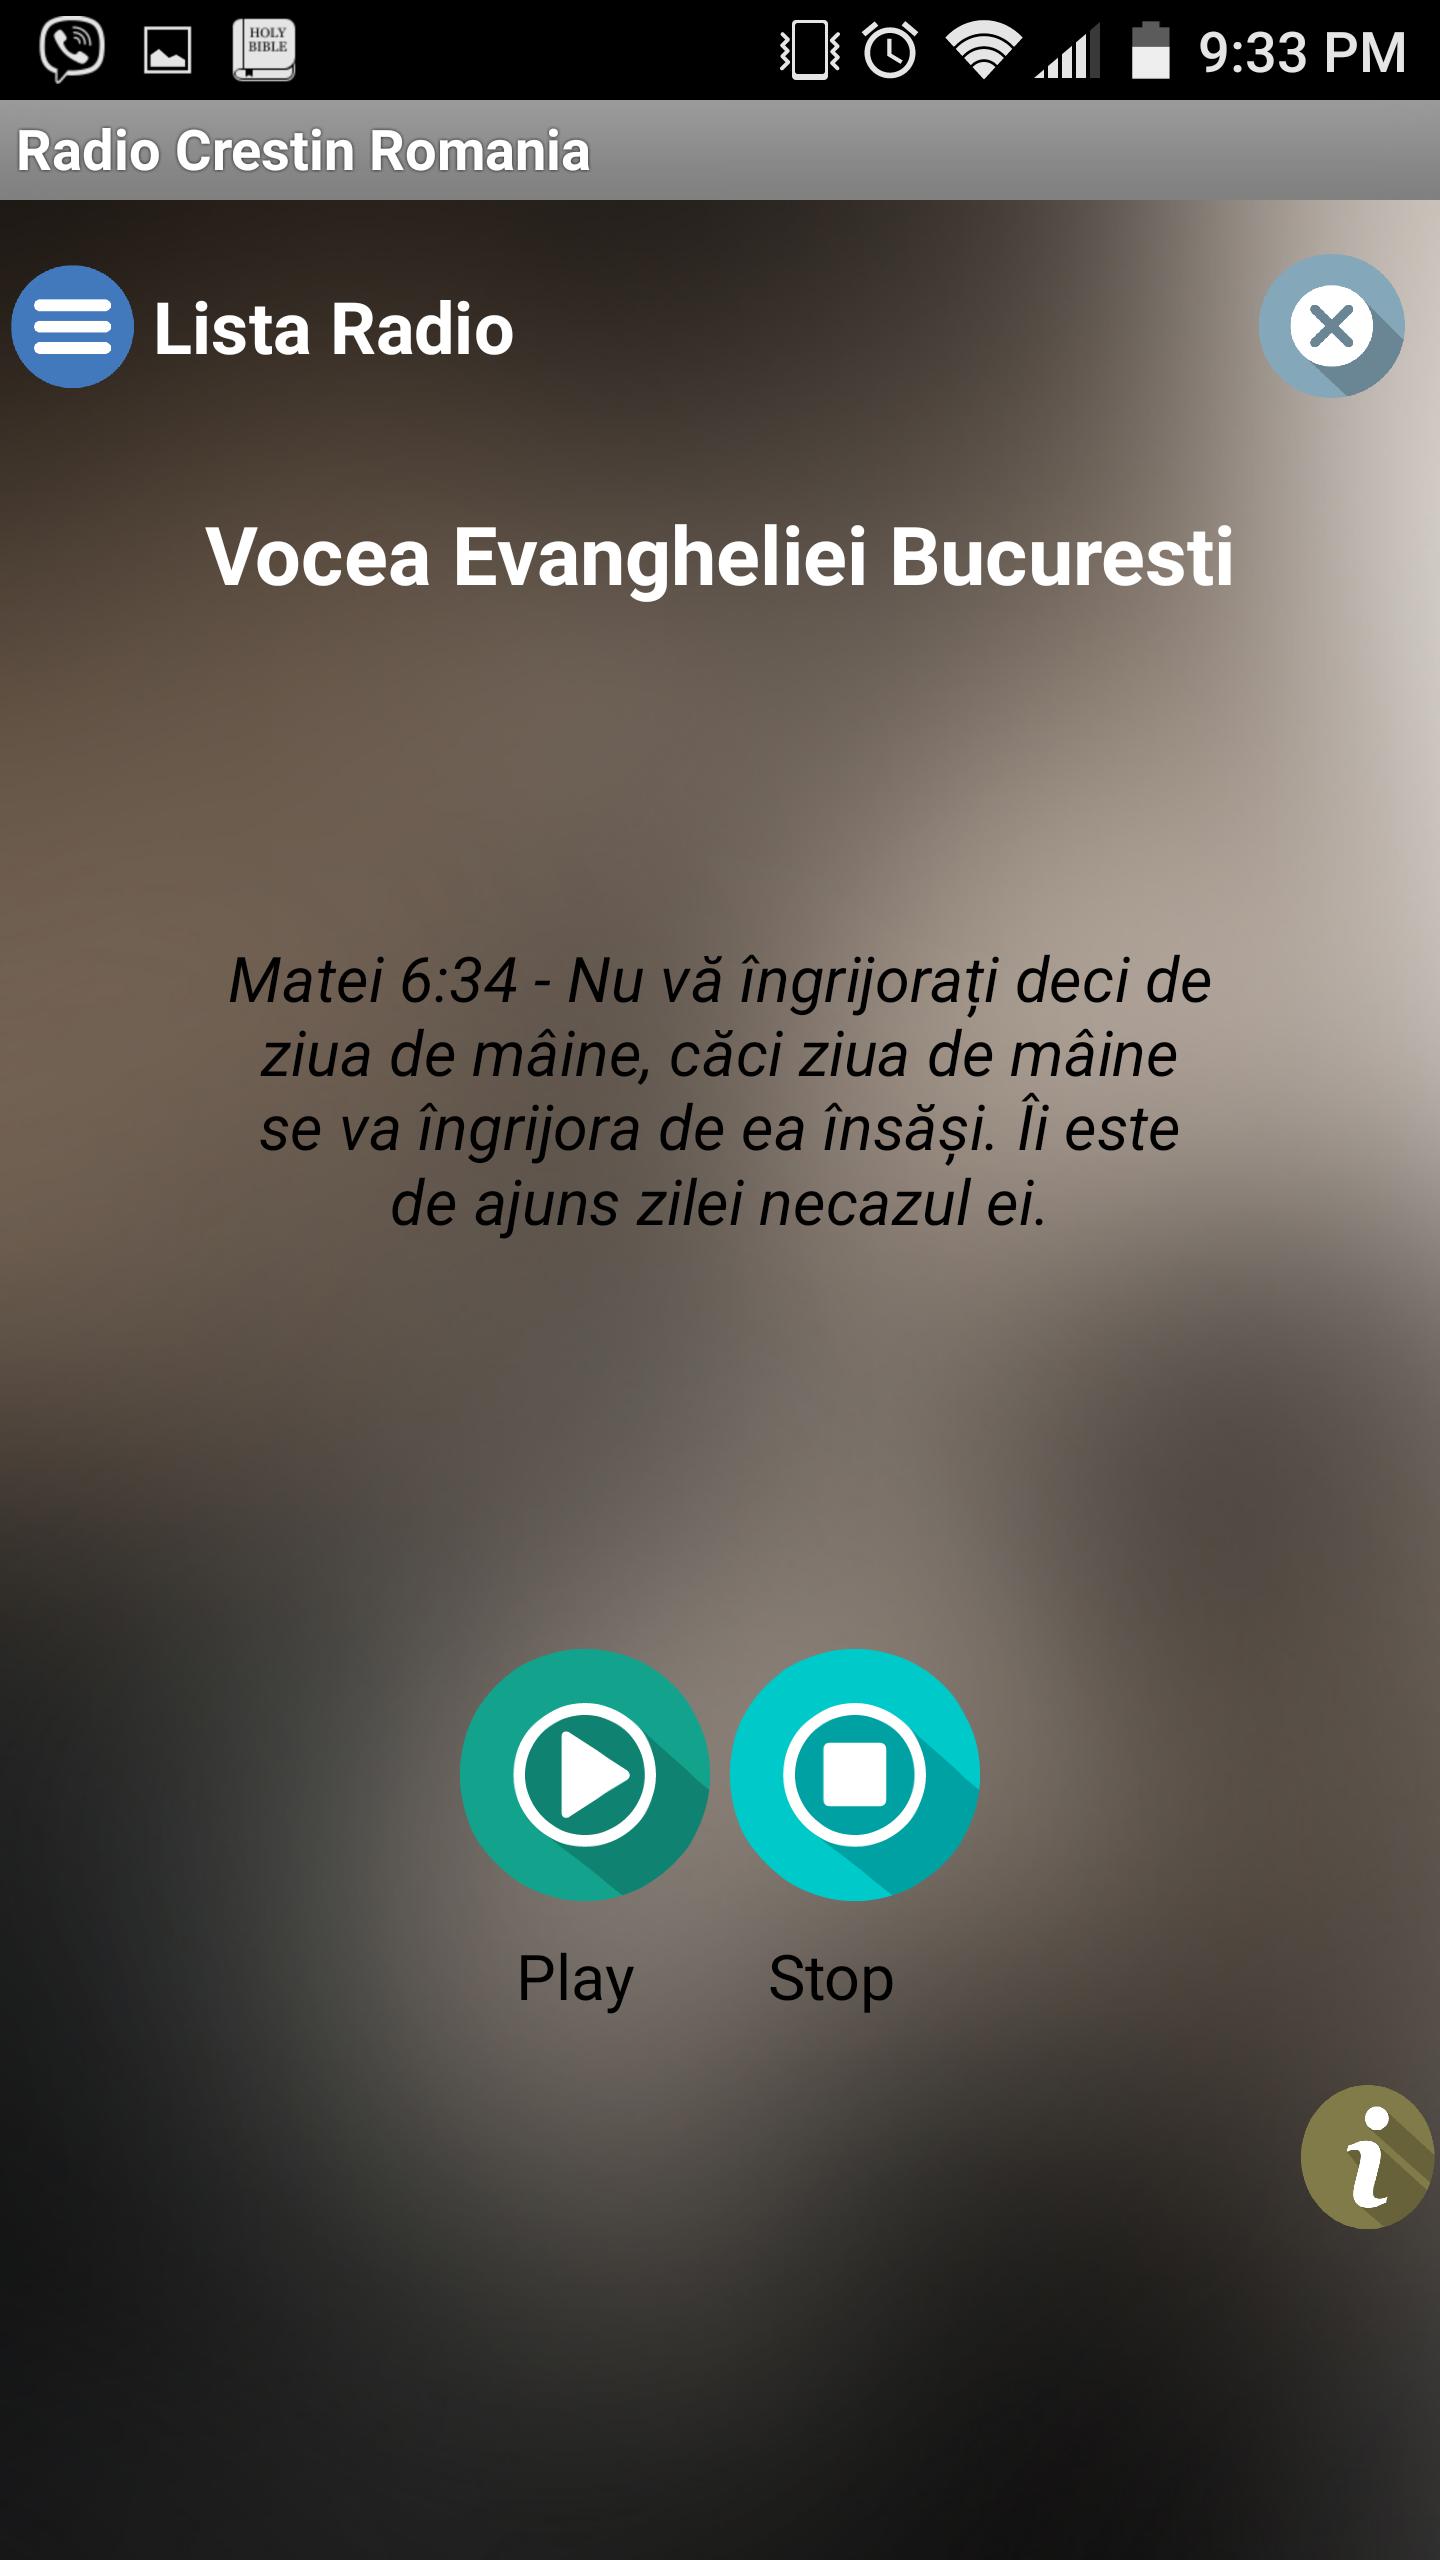 Radio Crestin Romania for Android - APK Download